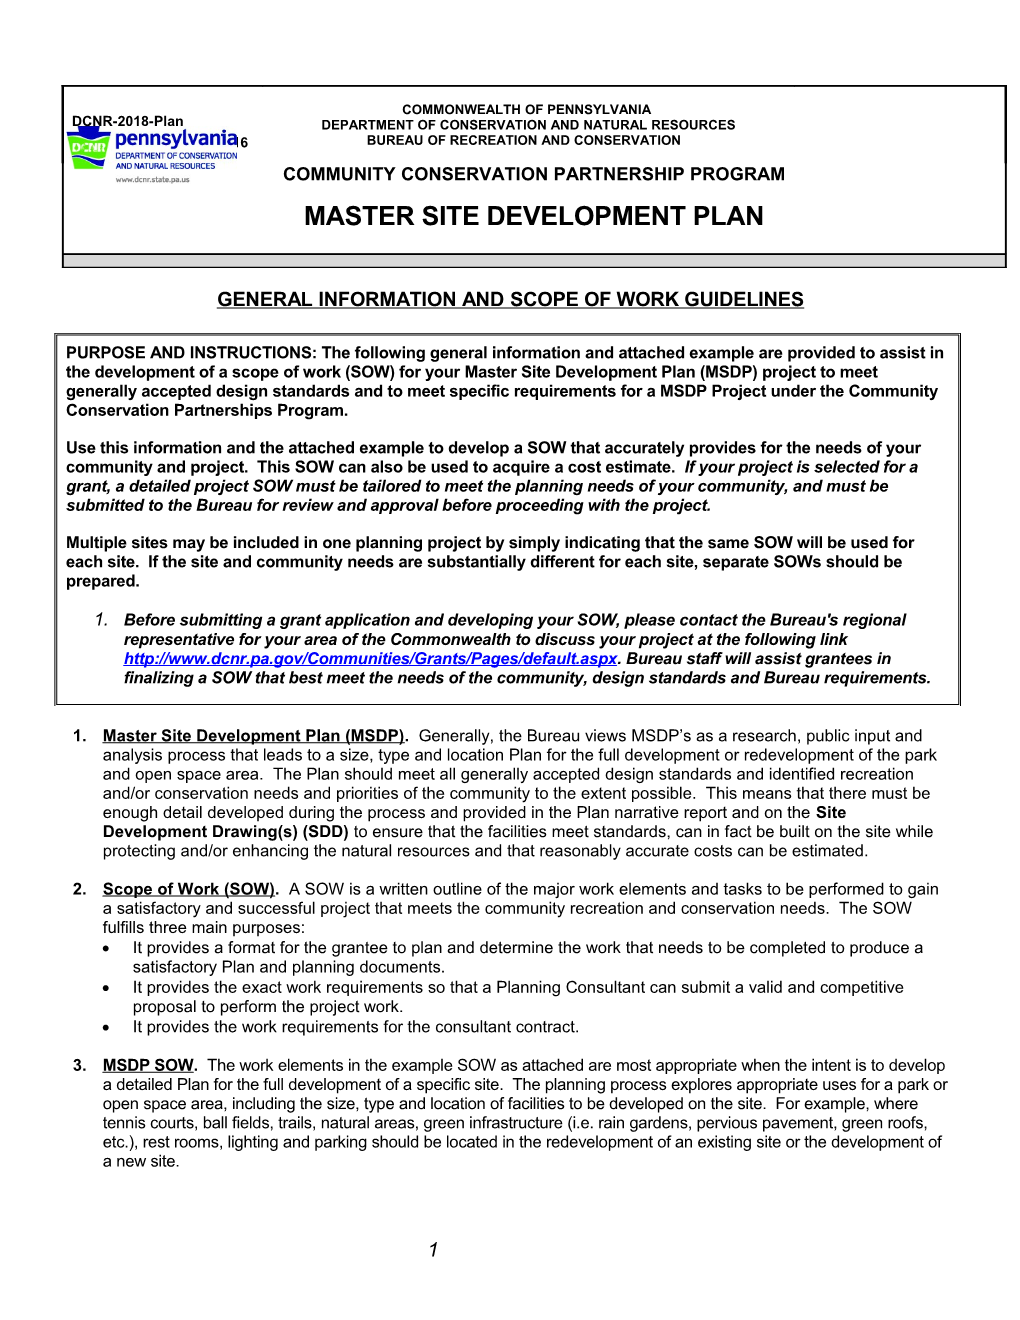 Master Site Development Plan